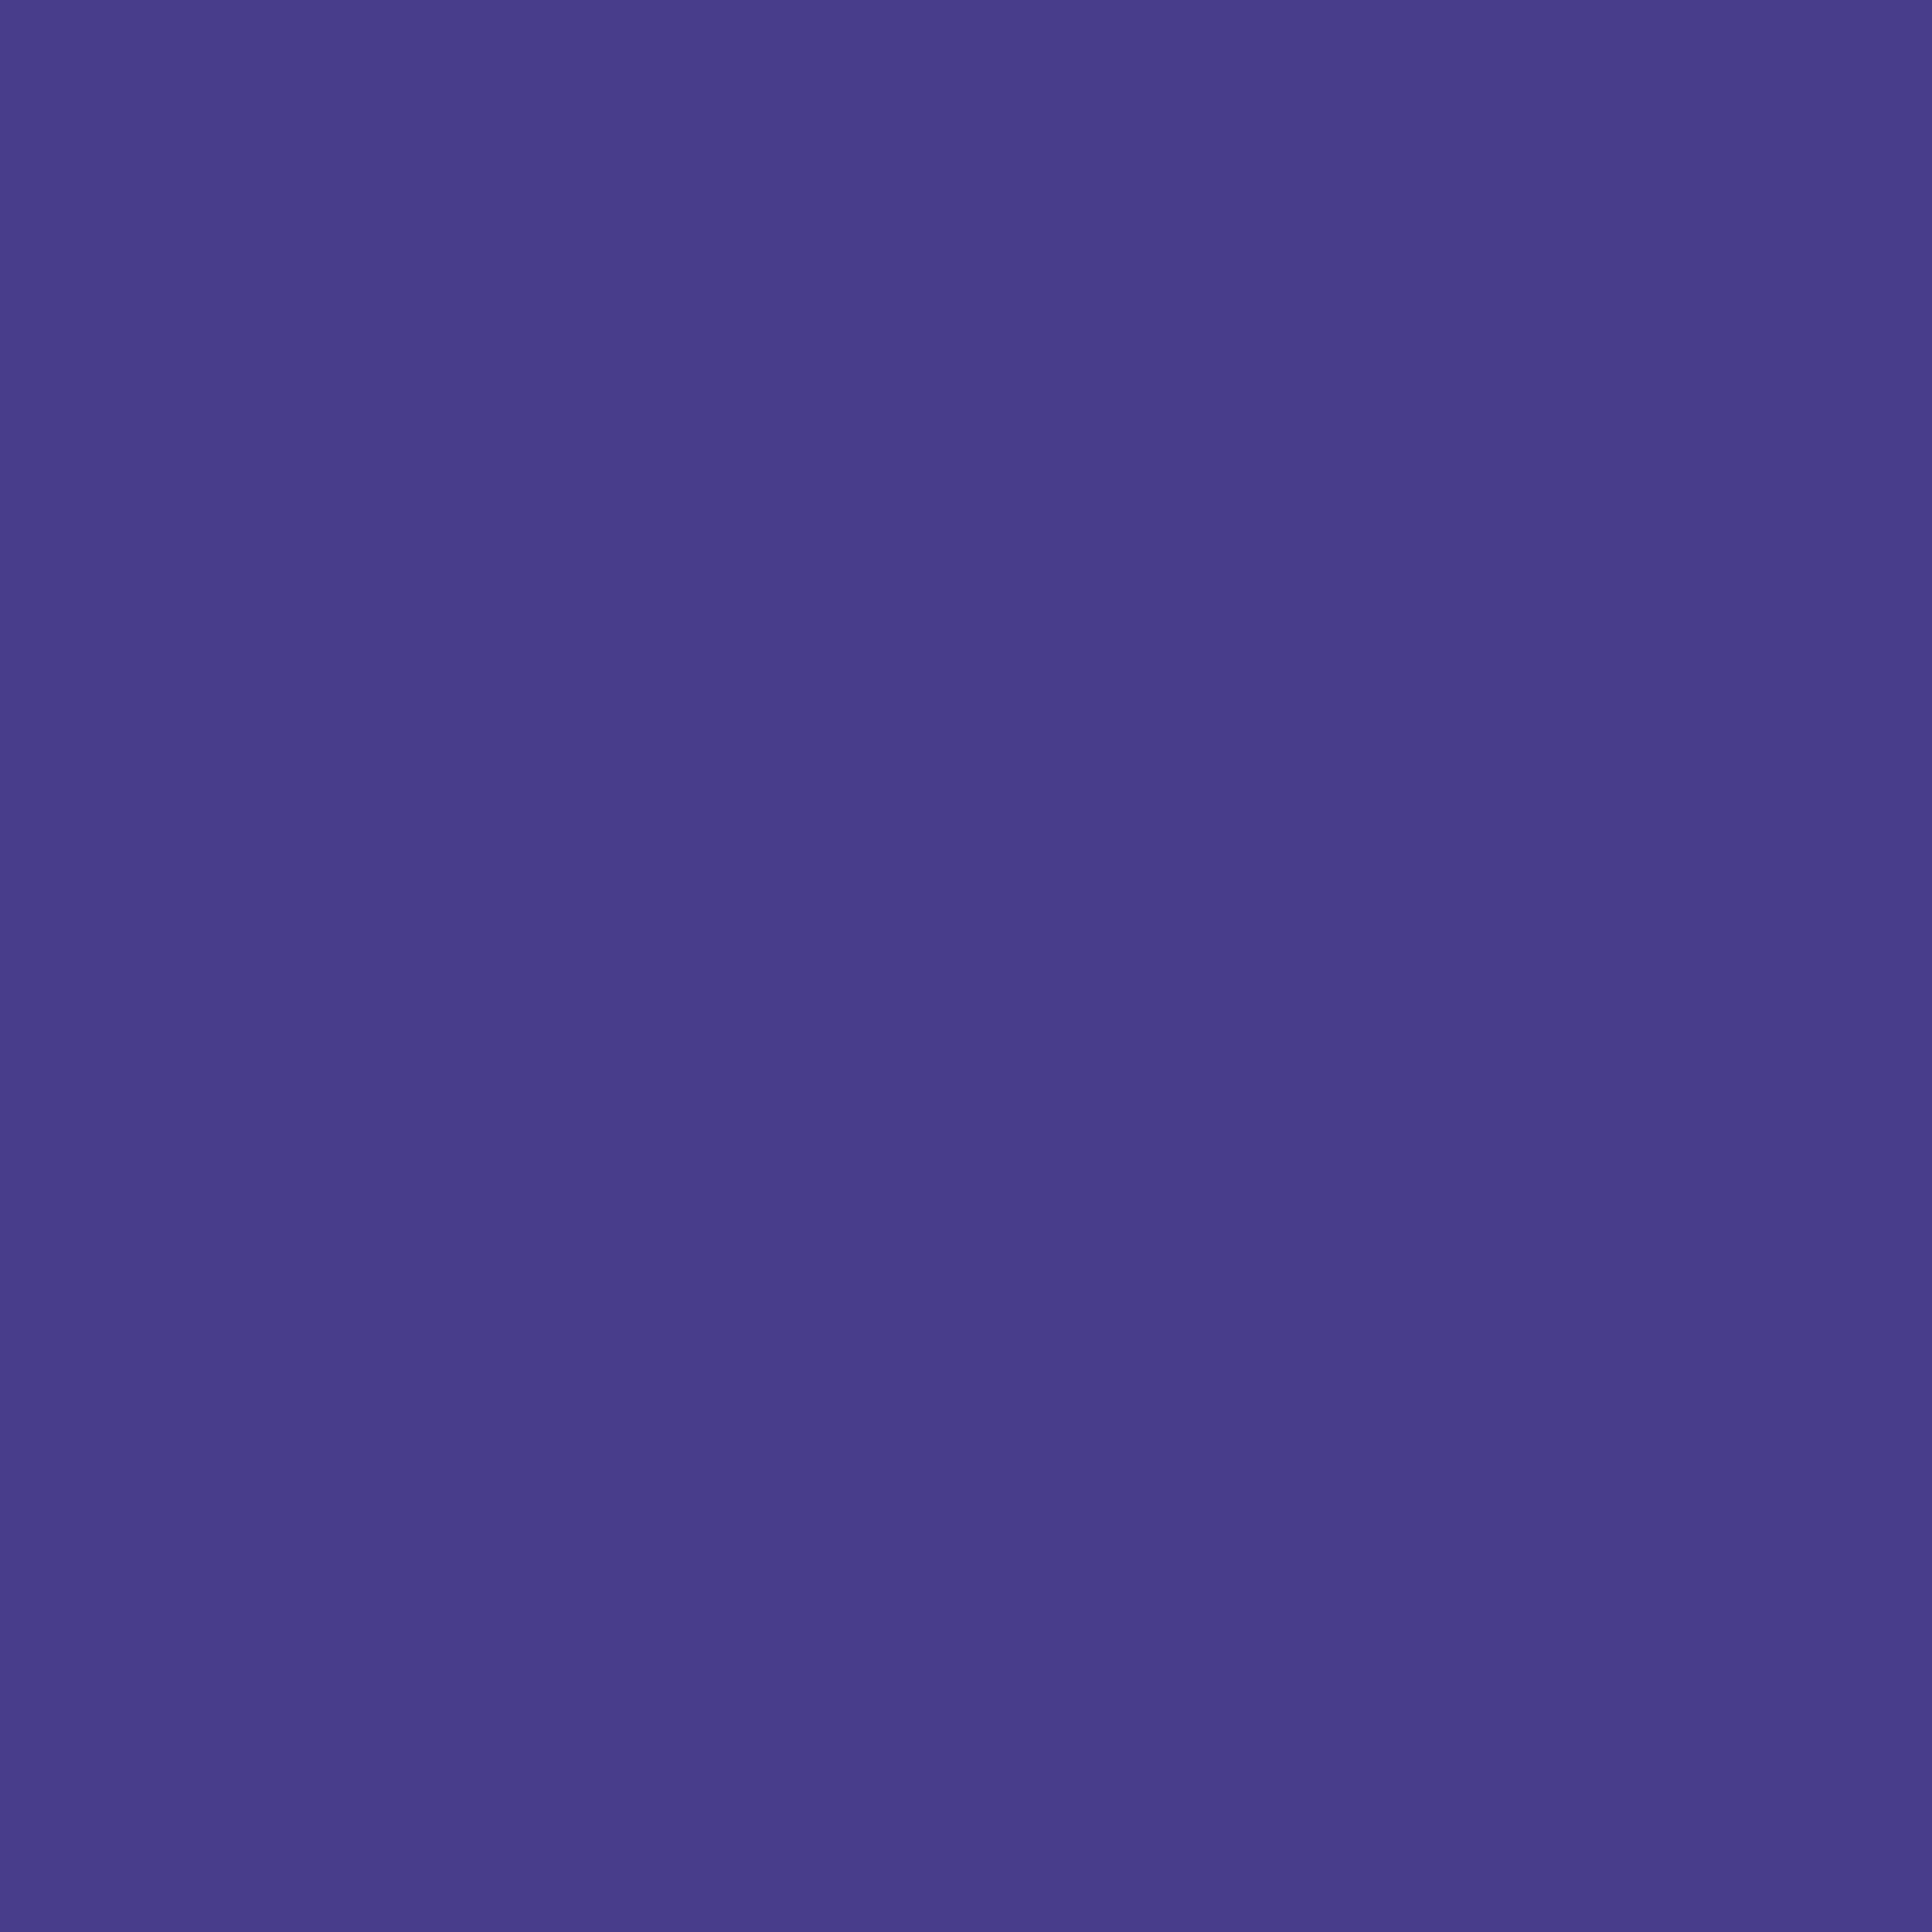 2732x2732 Dark Slate Blue Solid Color Background